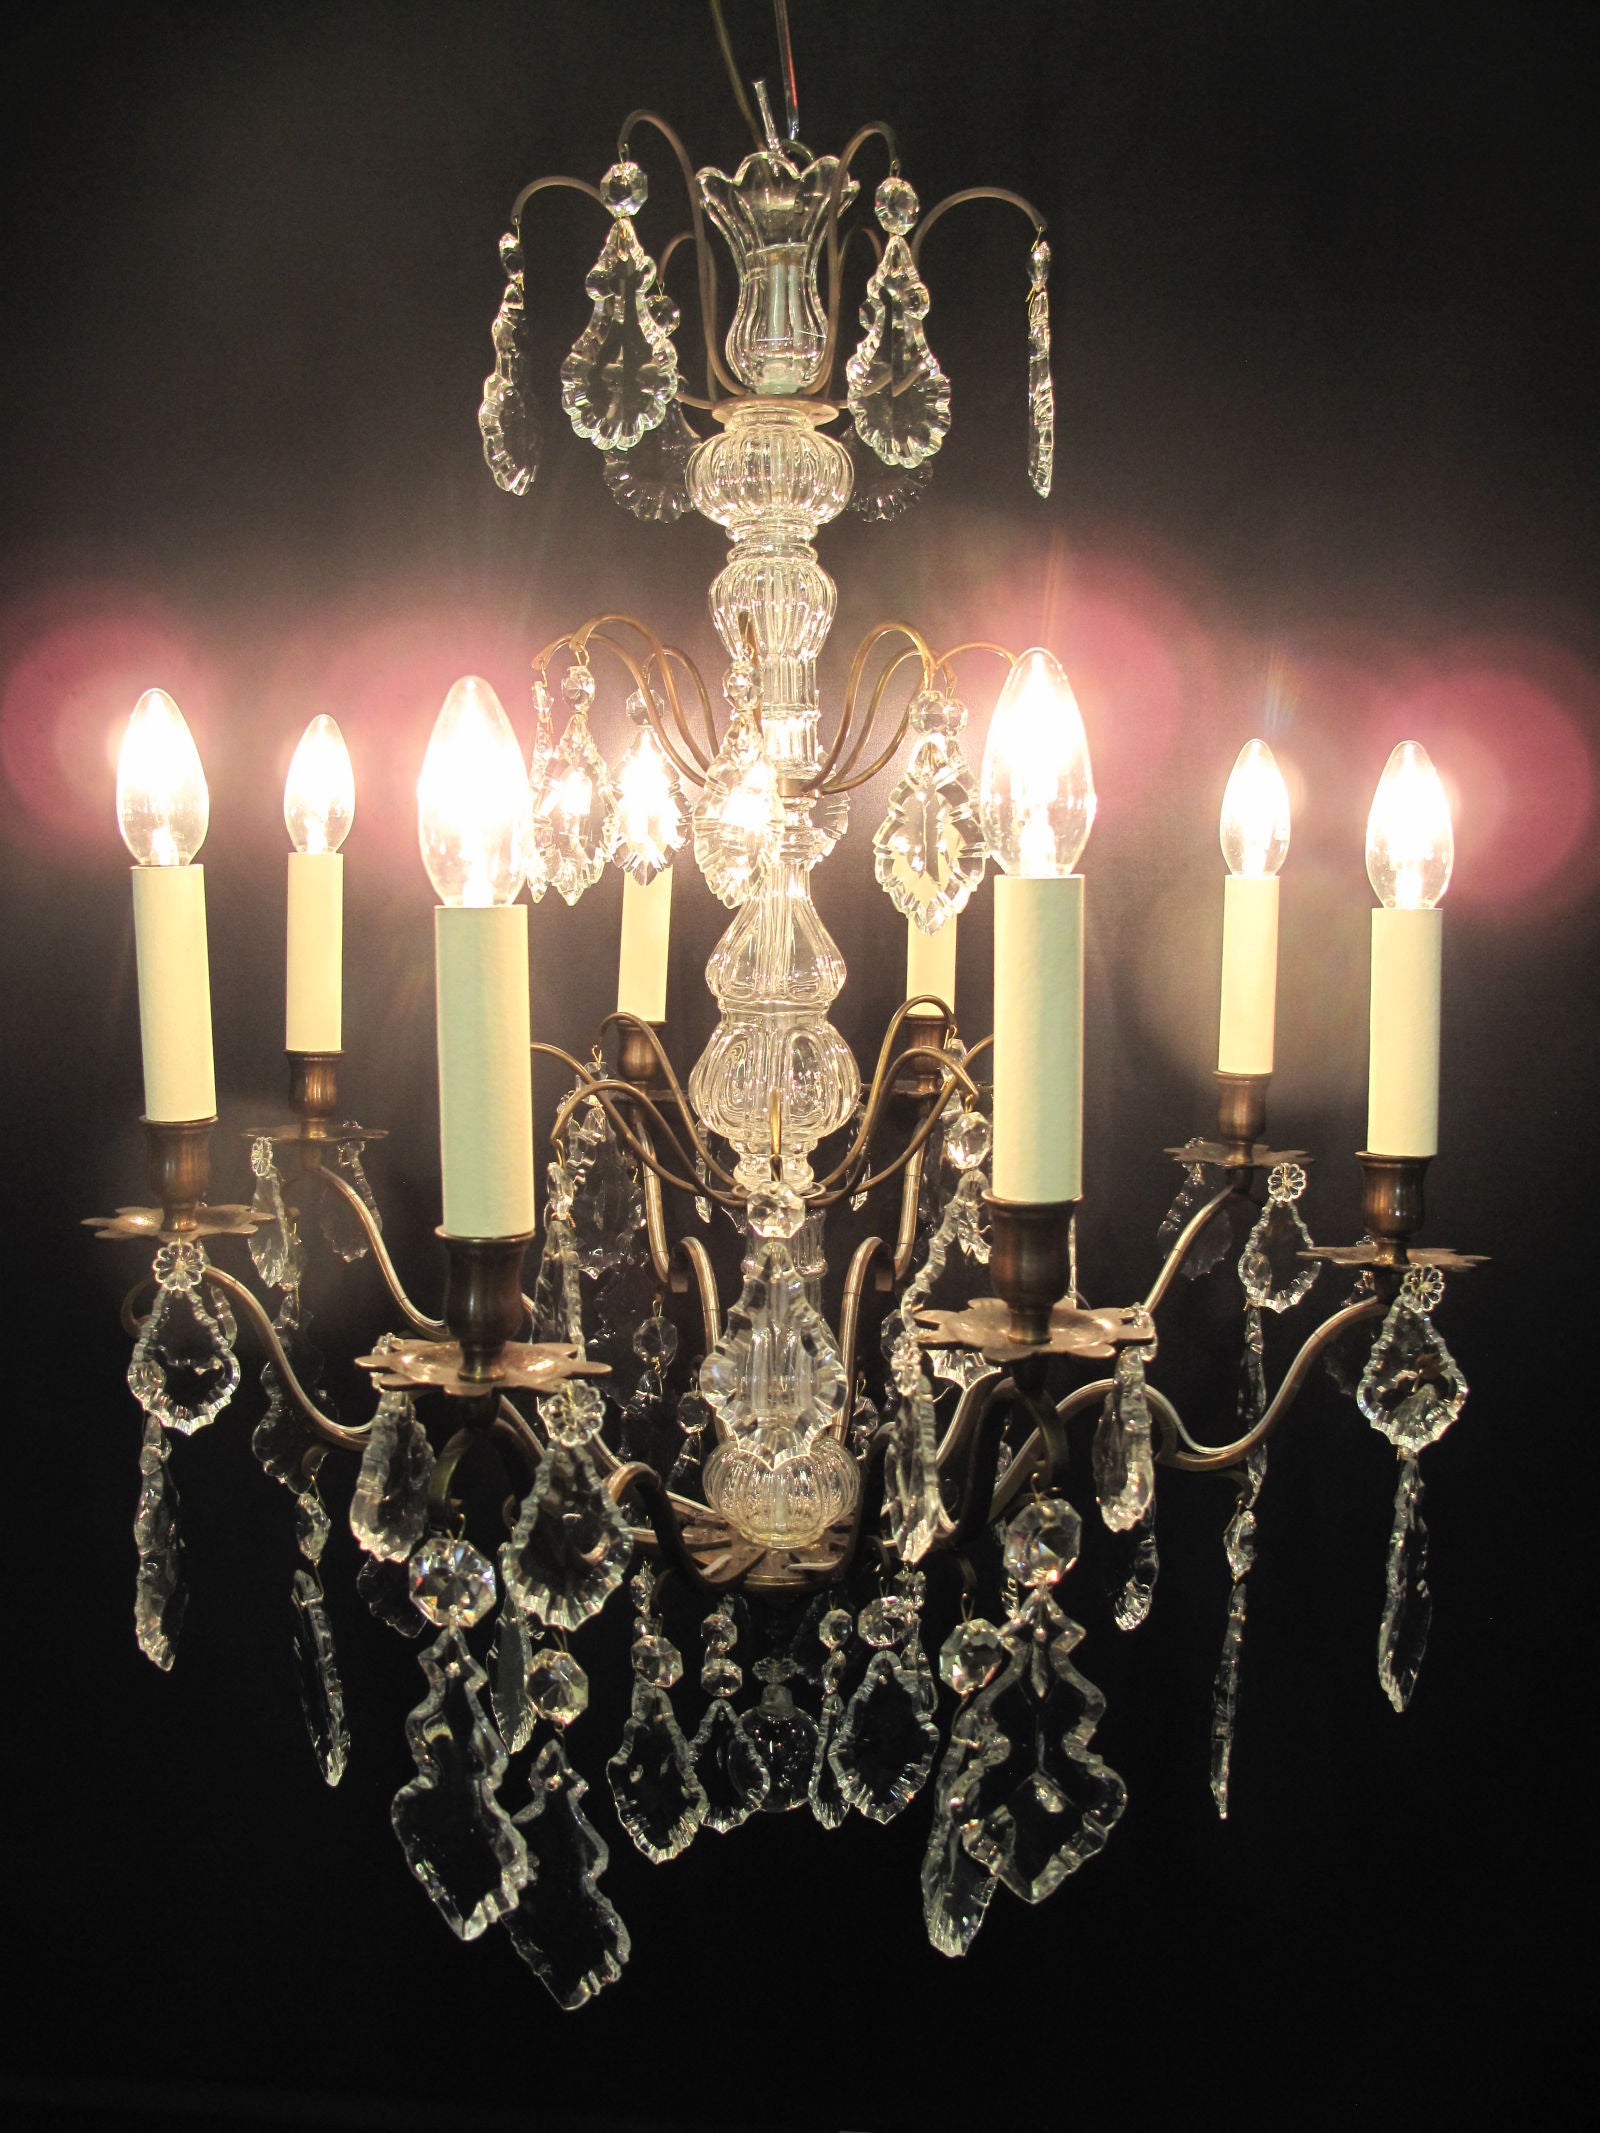 chandelier lit up